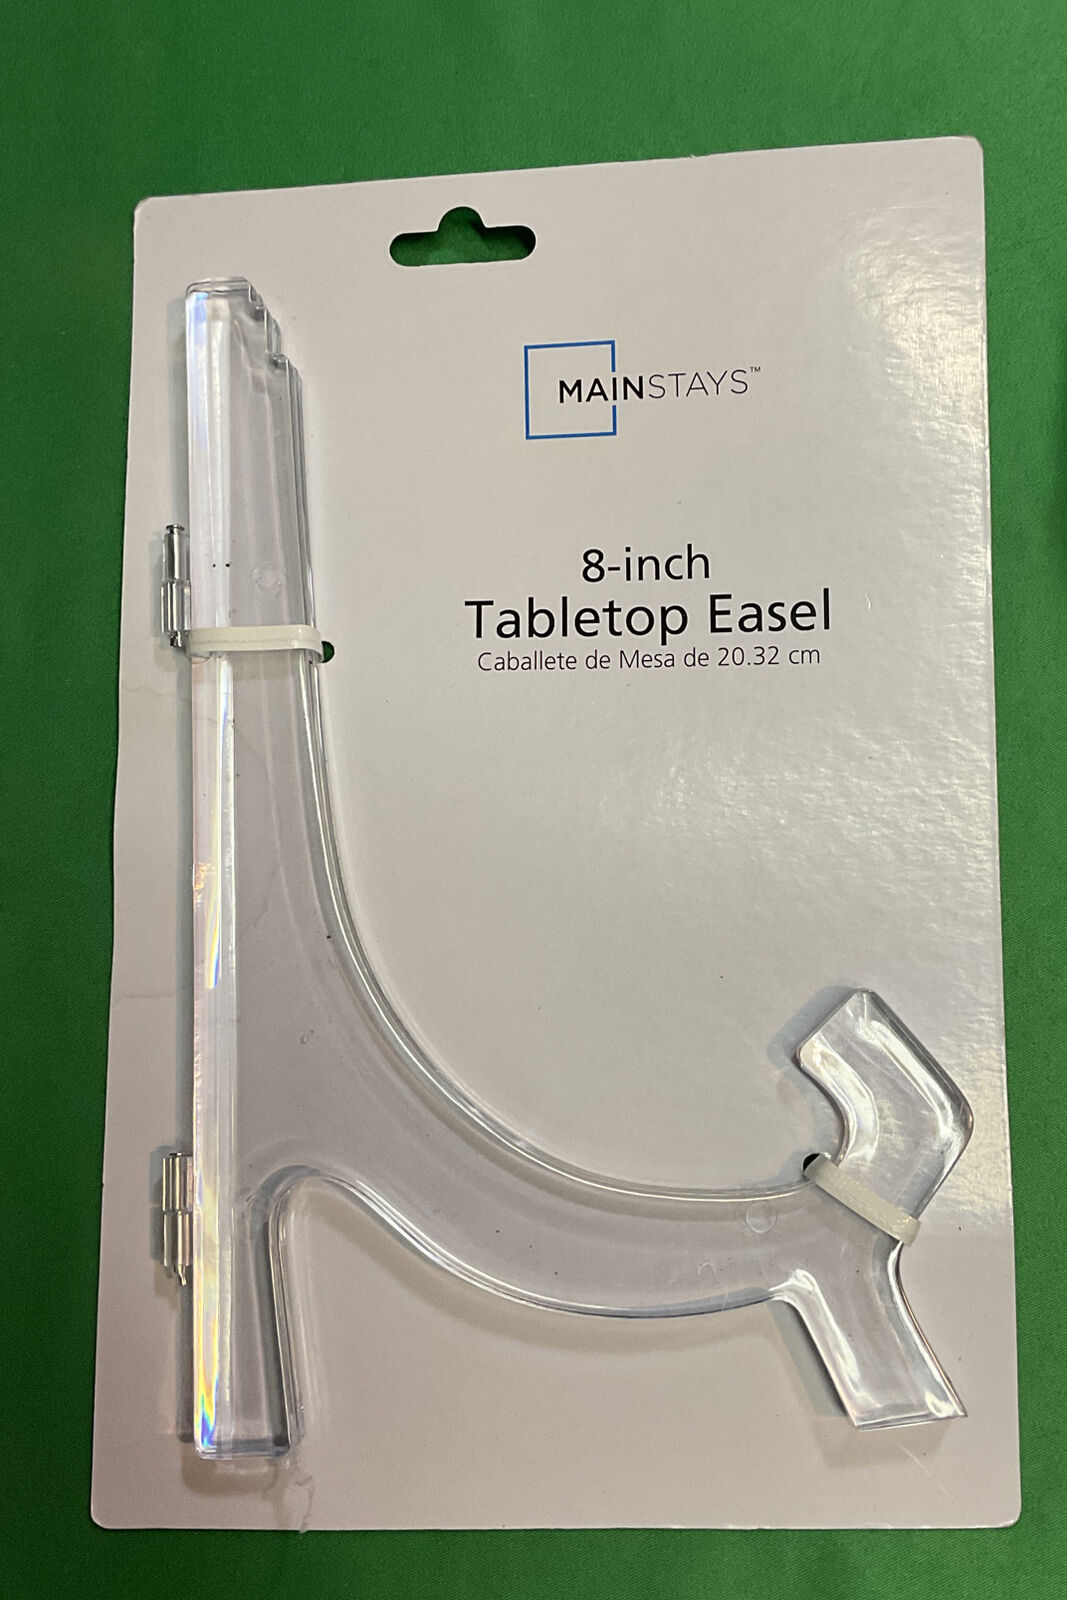 mainstays 8” tabletop Plastic Easel